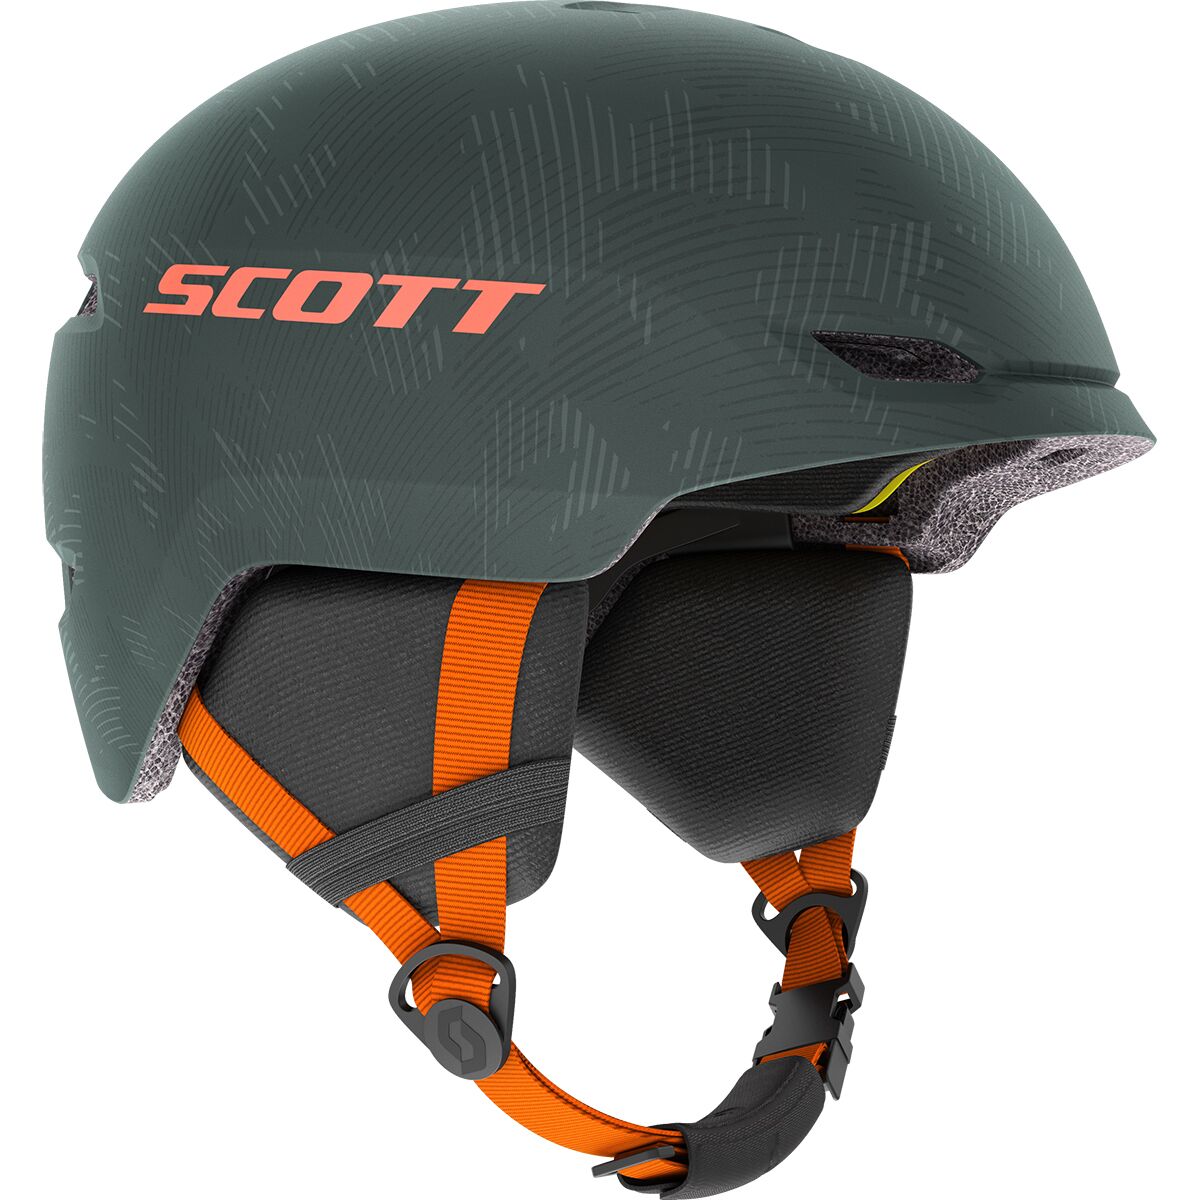 Details about   Scott Keeper 2 Plus Helmet Kids' 